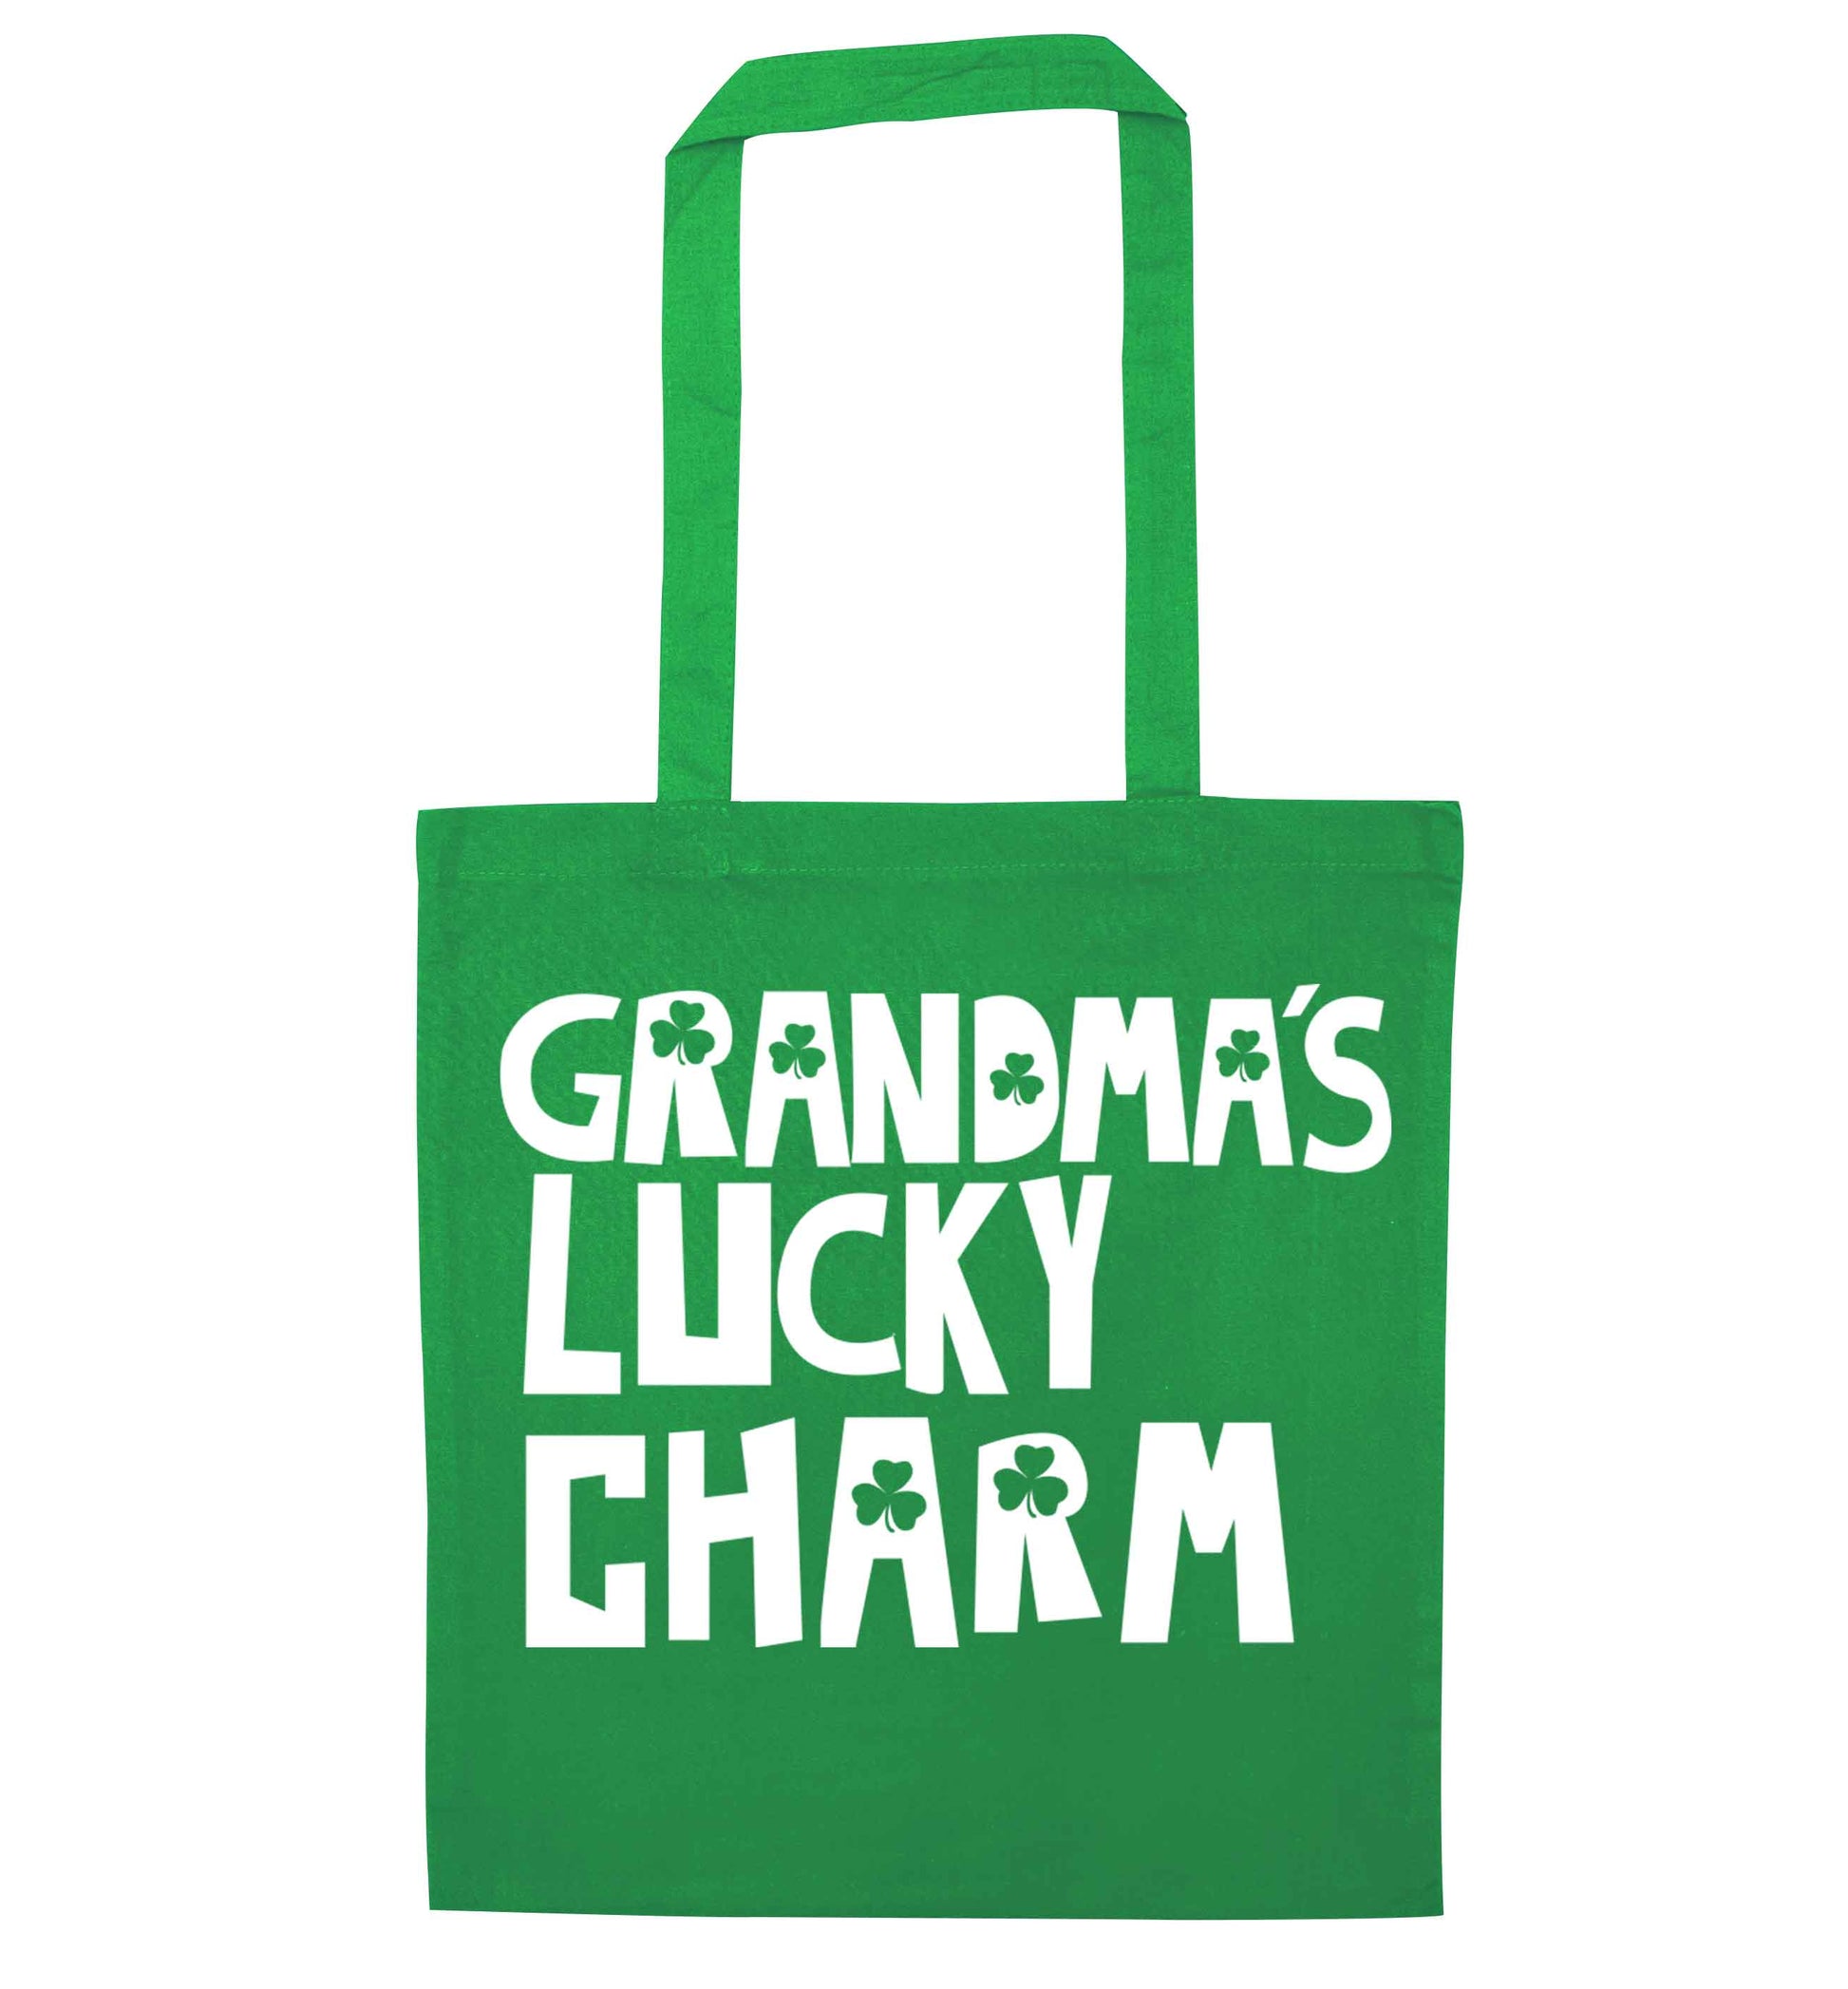 Grandma's lucky charm green tote bag